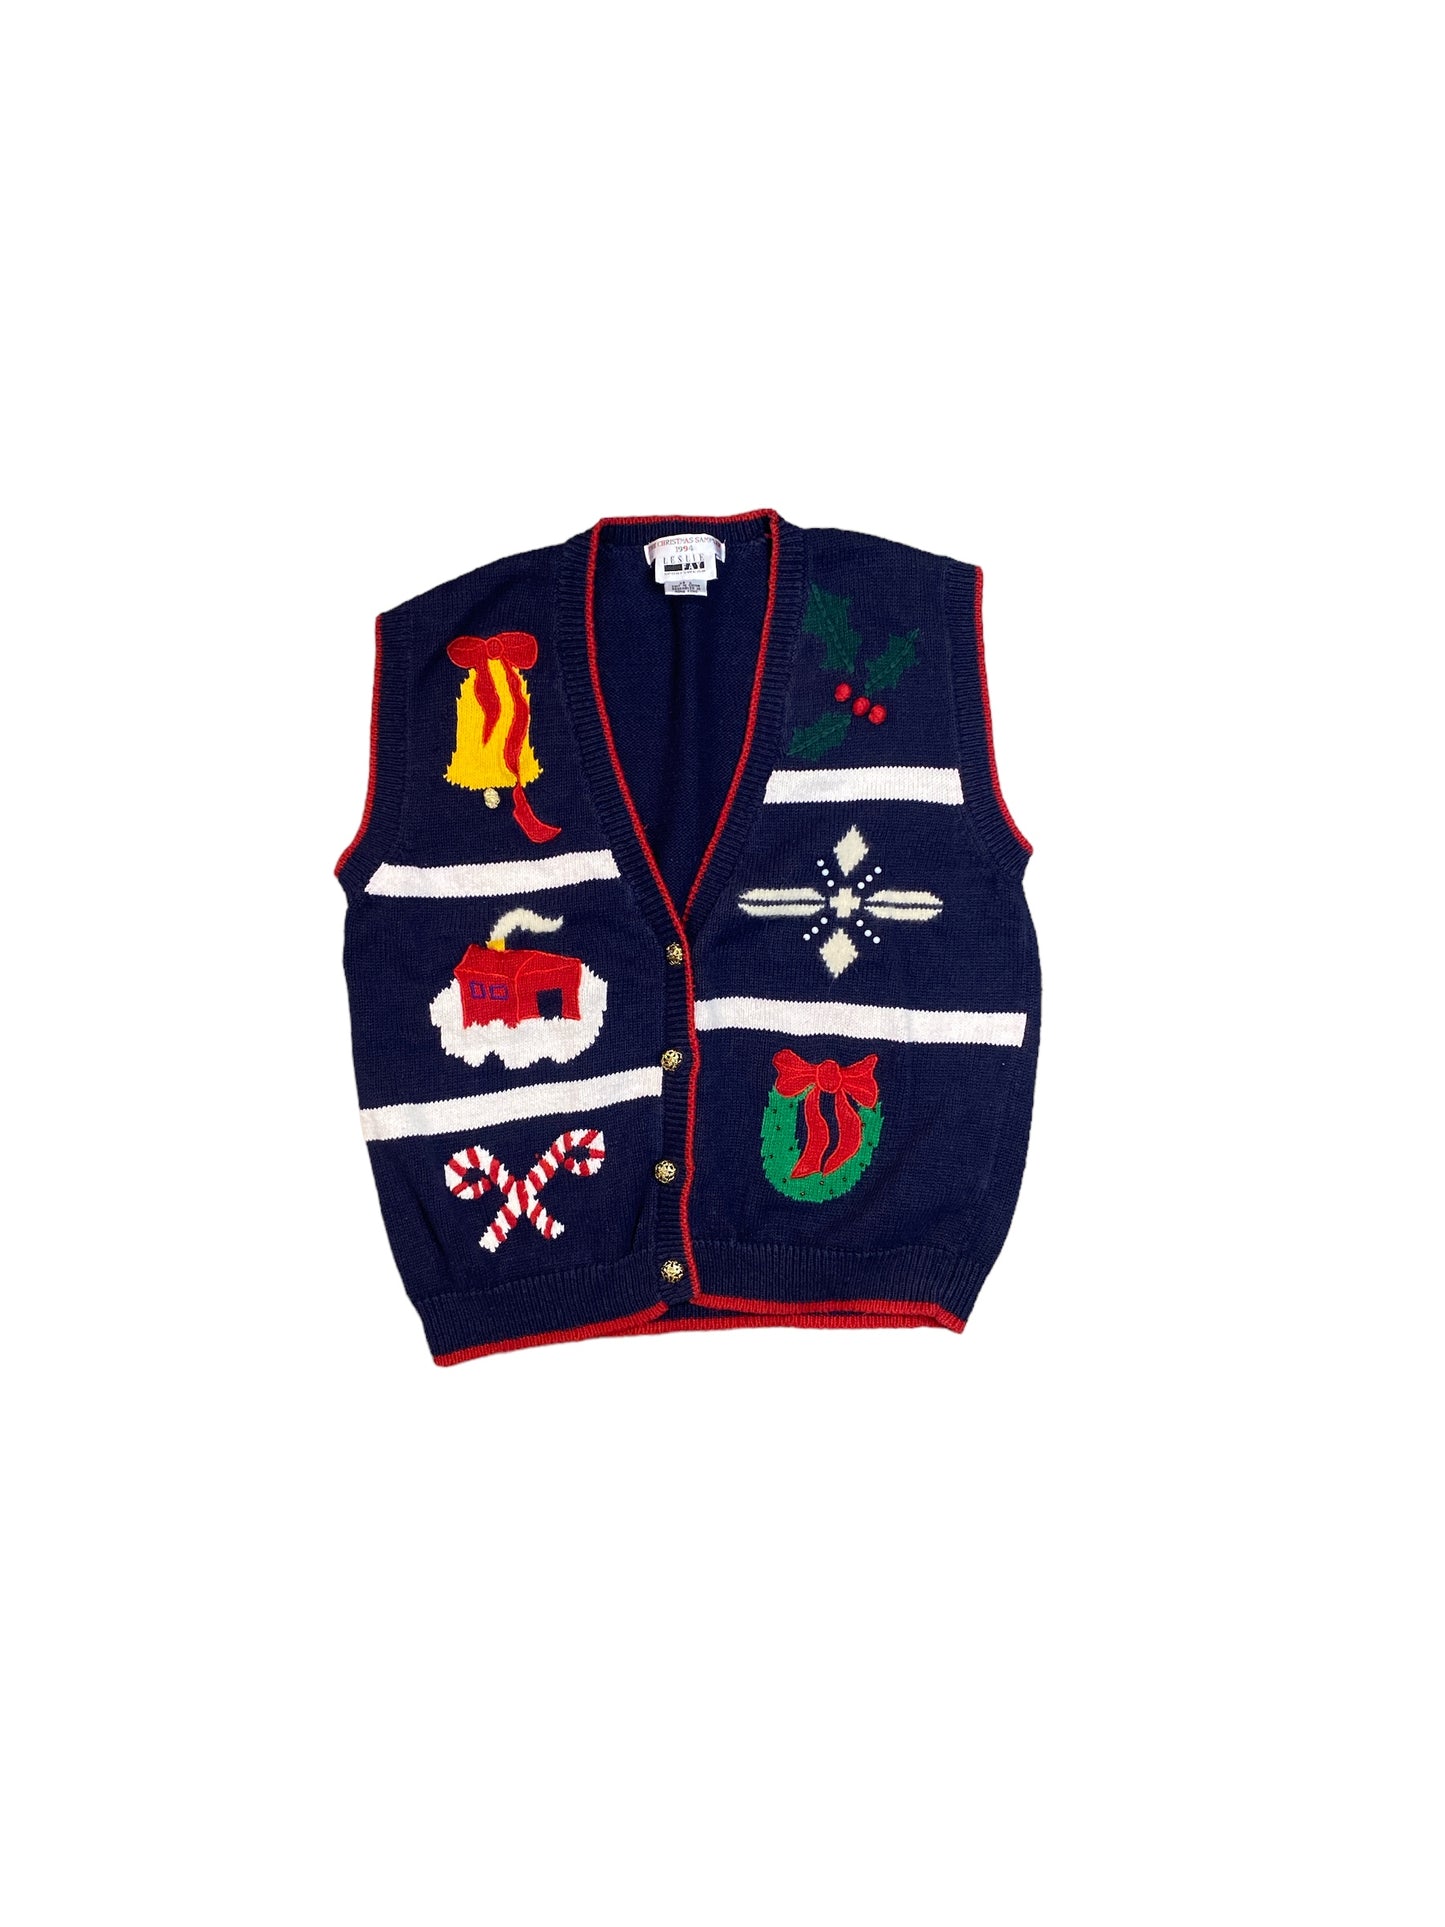 '94 Christmas Sweater Vest (L)